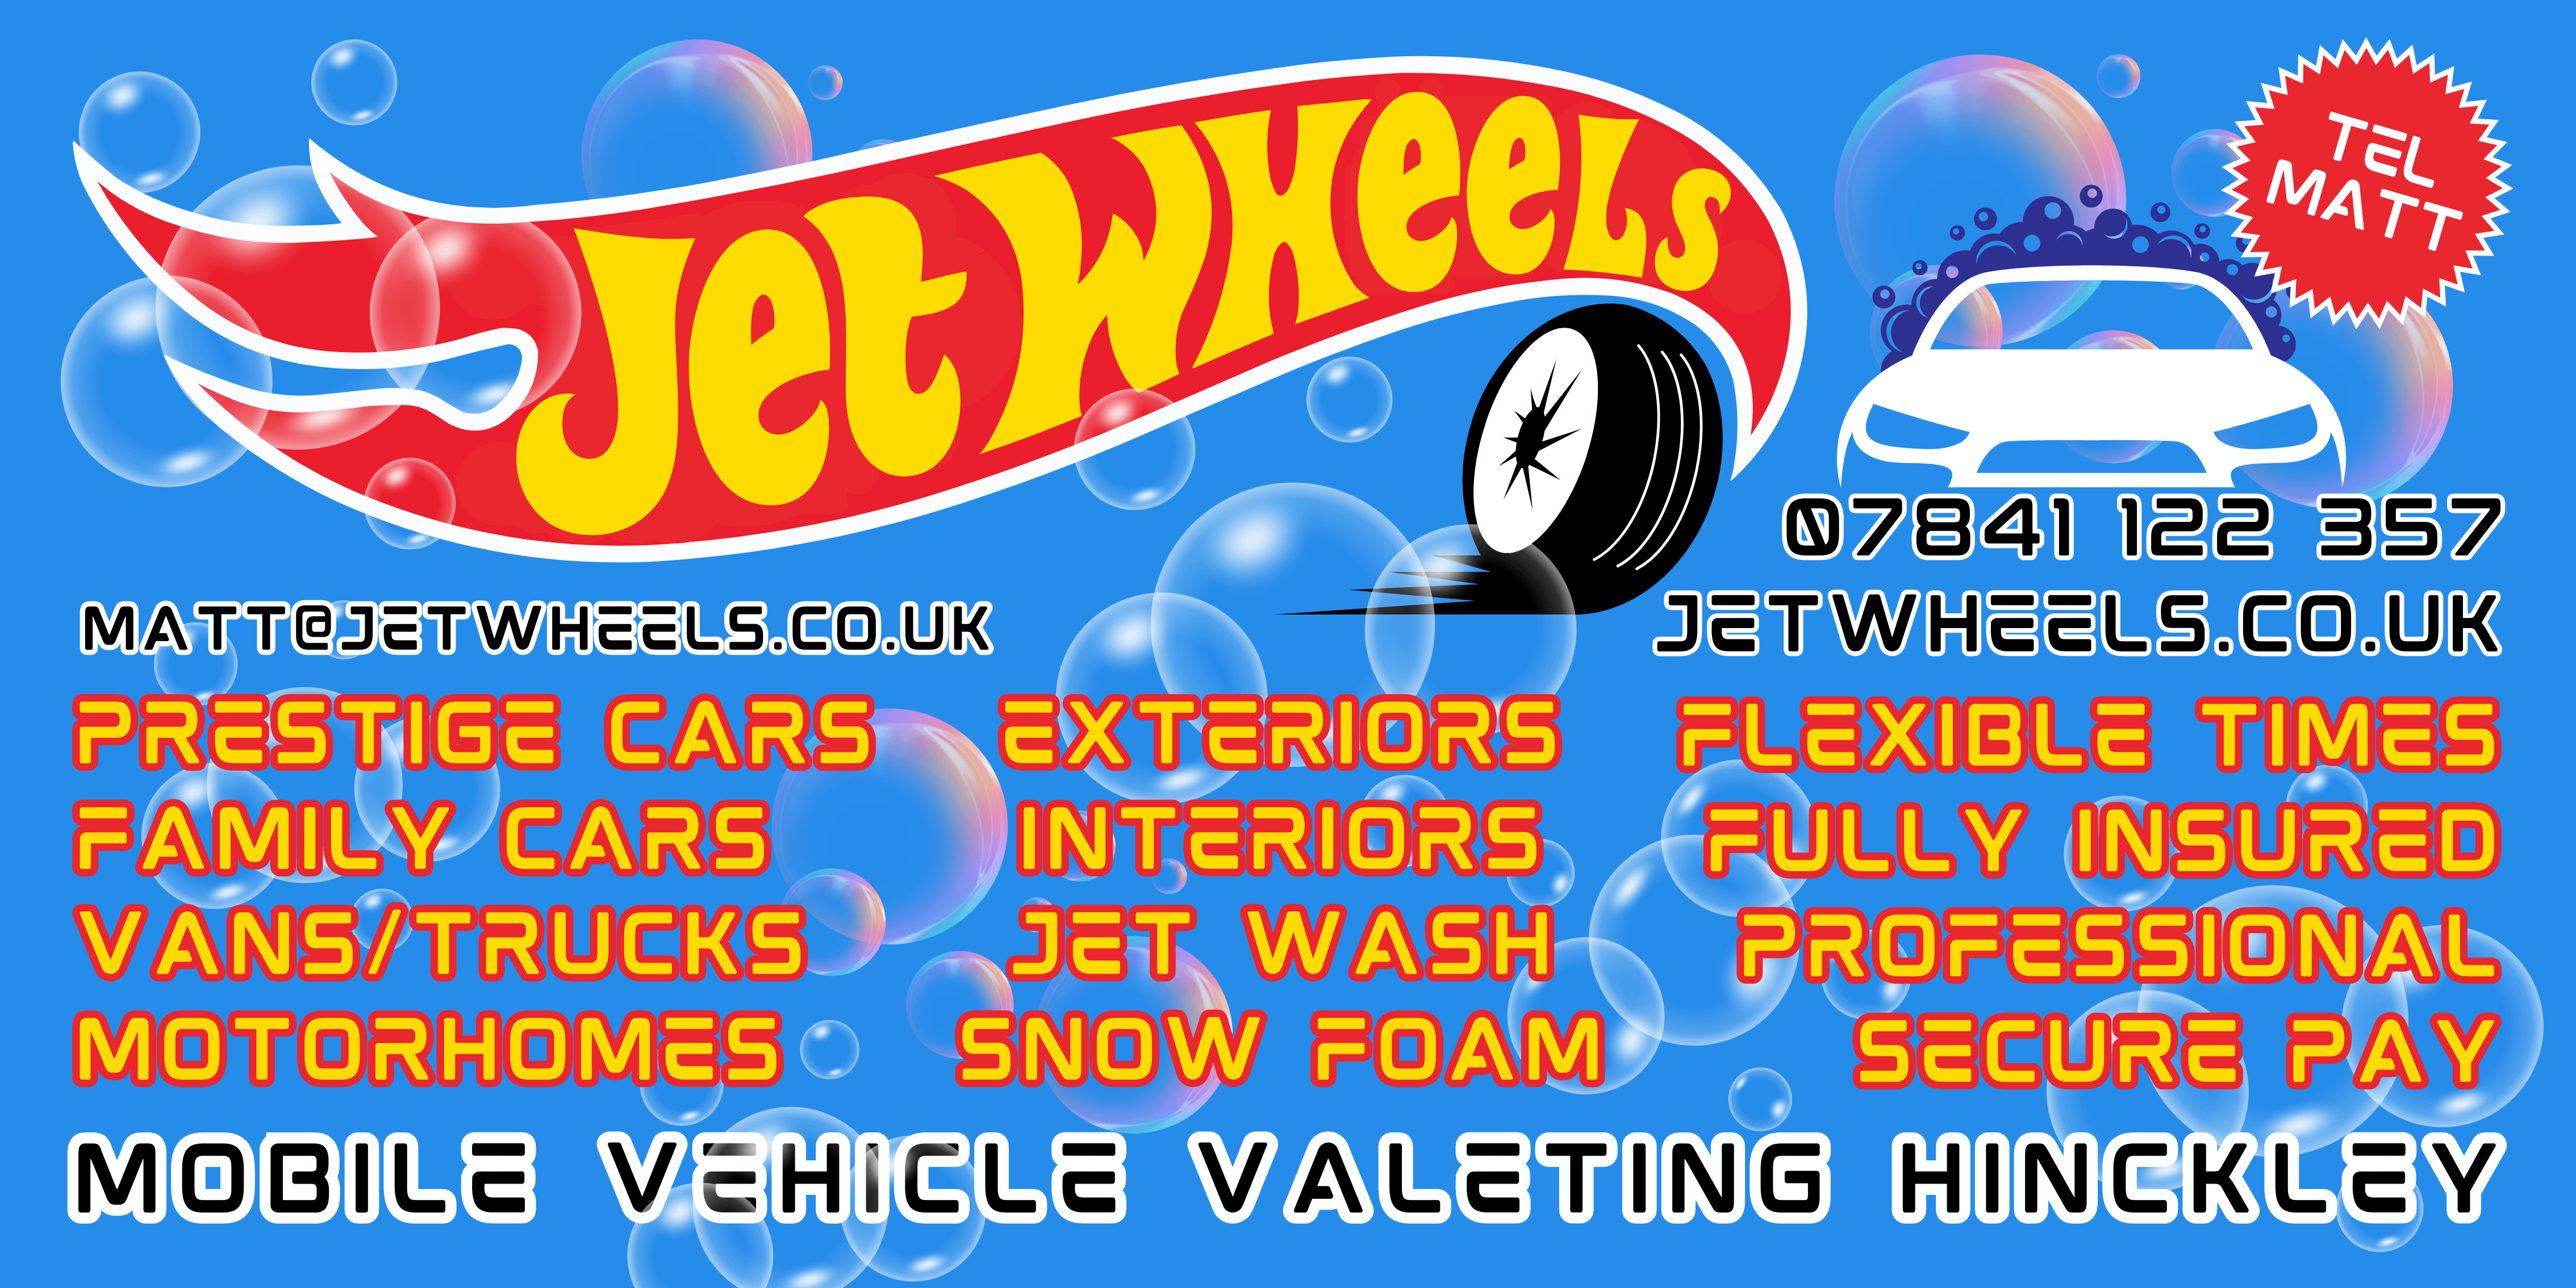 reviews jet wheels mobile valeting hinckley